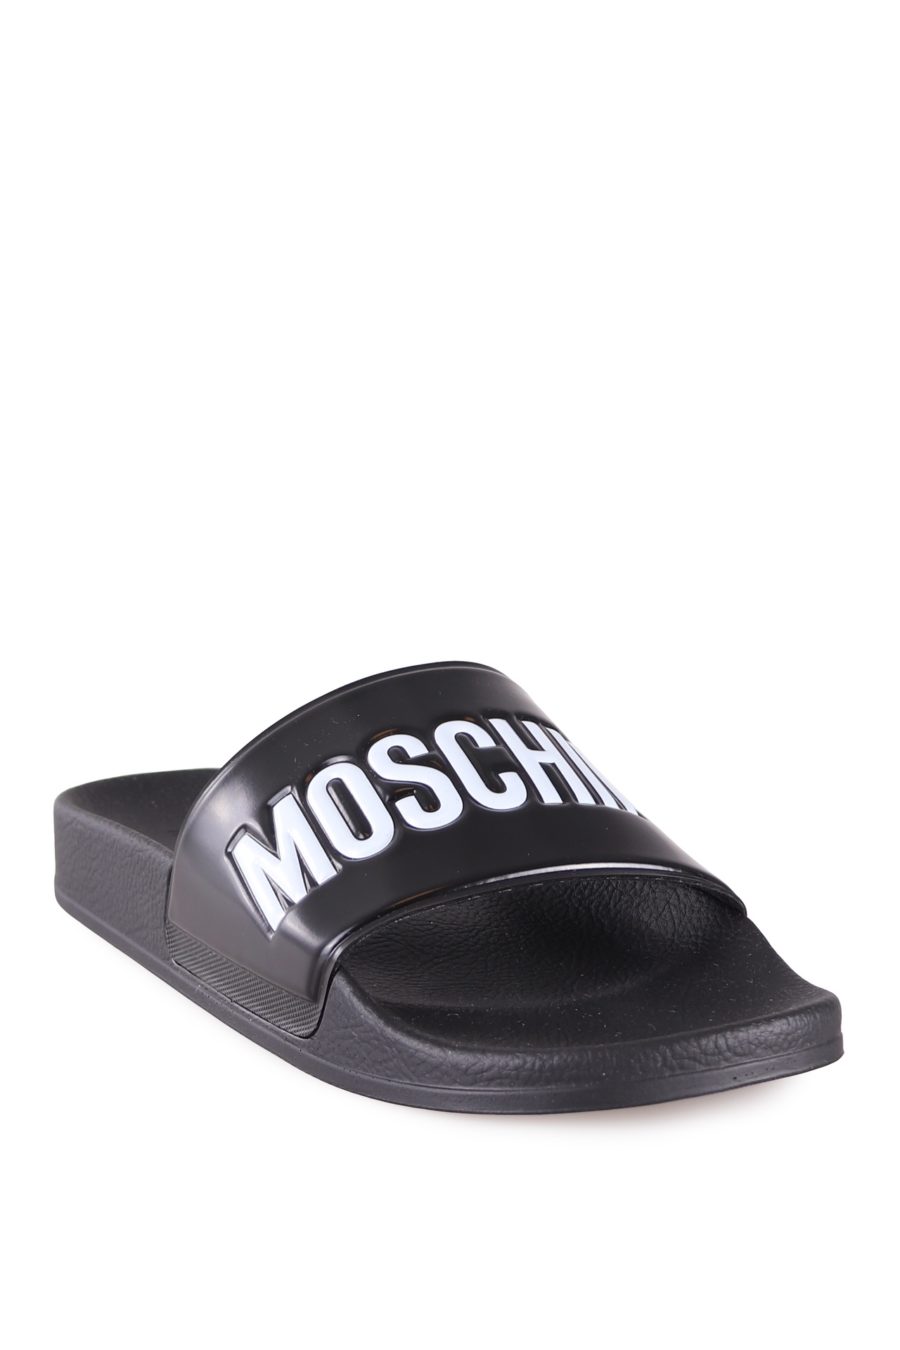 Moschino Couture schwarze Flip Flops mit weißem Logo - d093fb4a034325e19c434ecb0efb0e6a9f5959ef